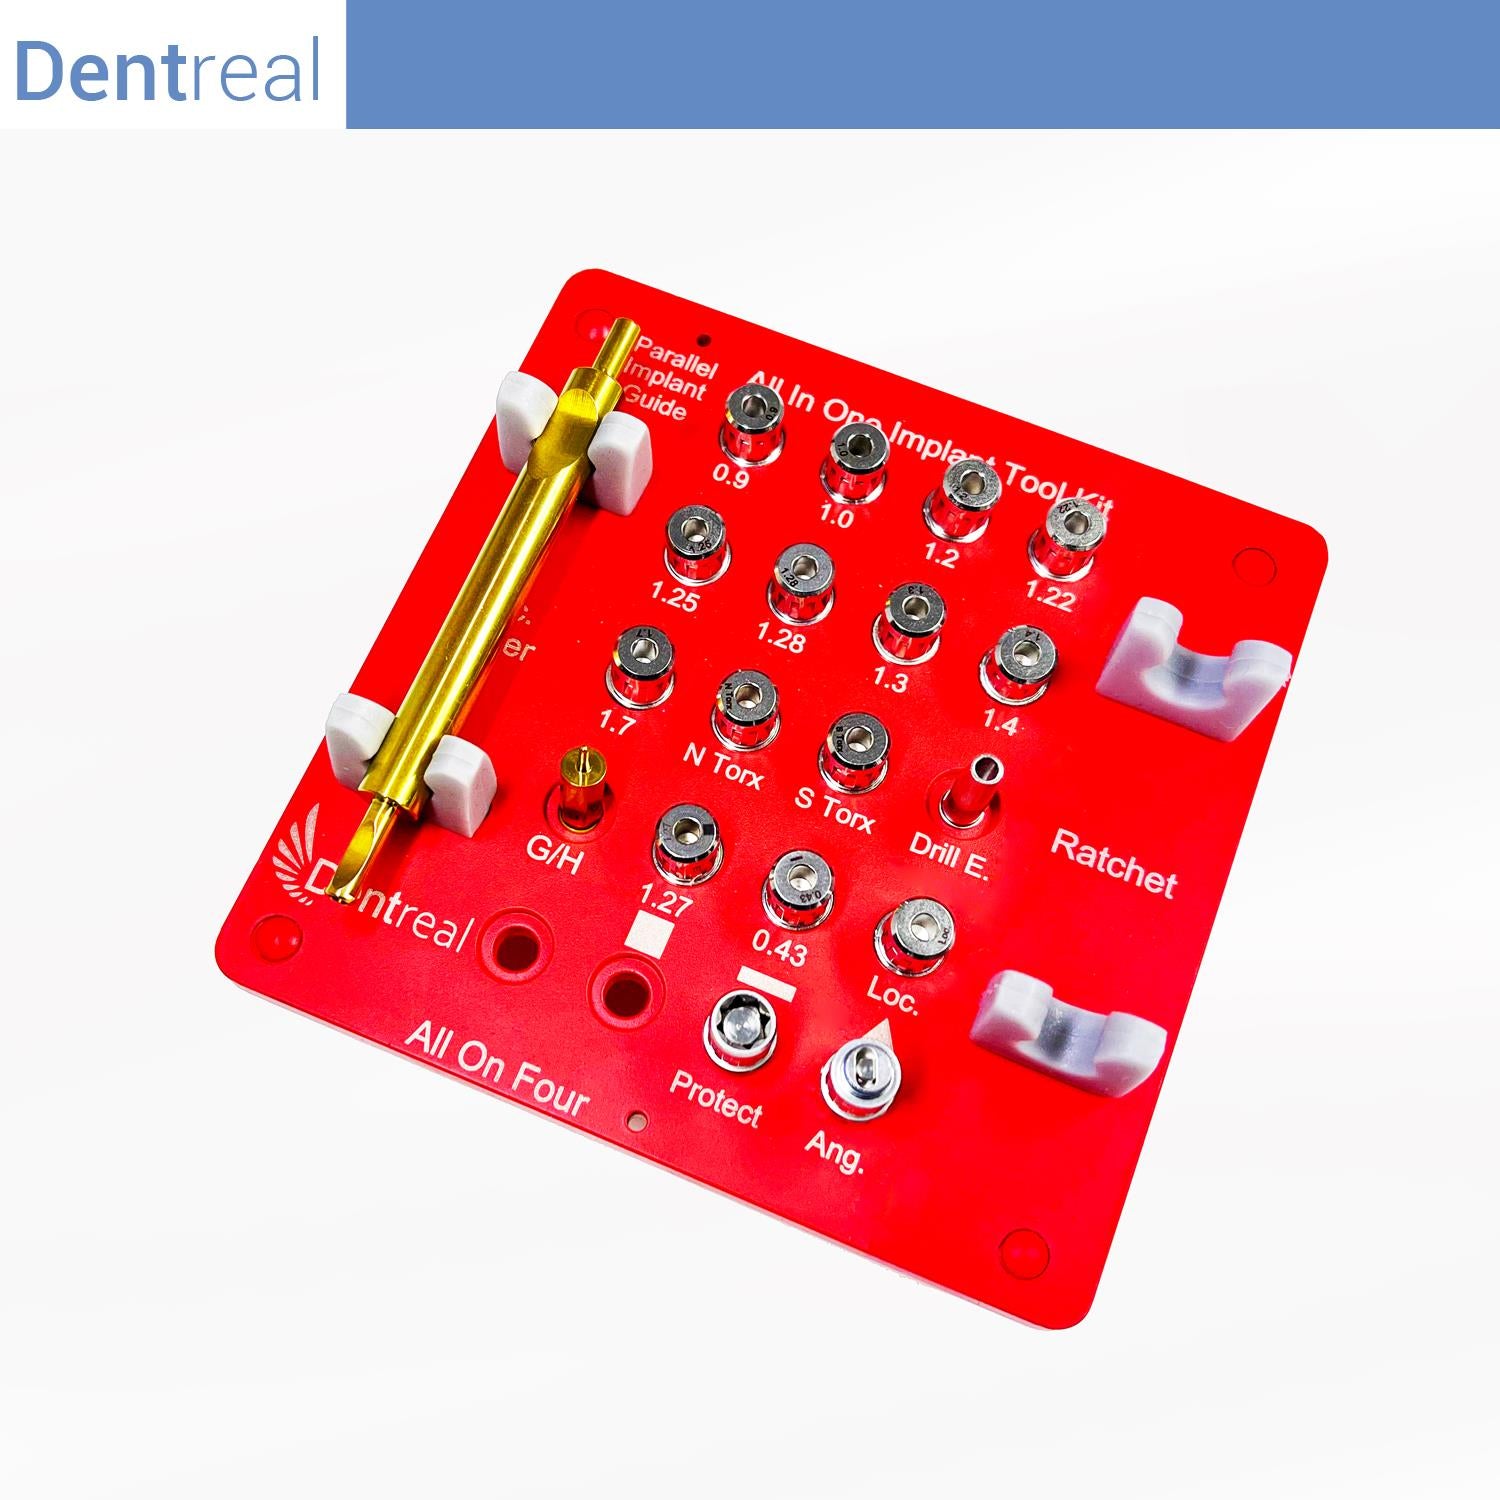 DentrealStore - Dentreal Universal Abutment Implant Screwdriver Set For Laboratory